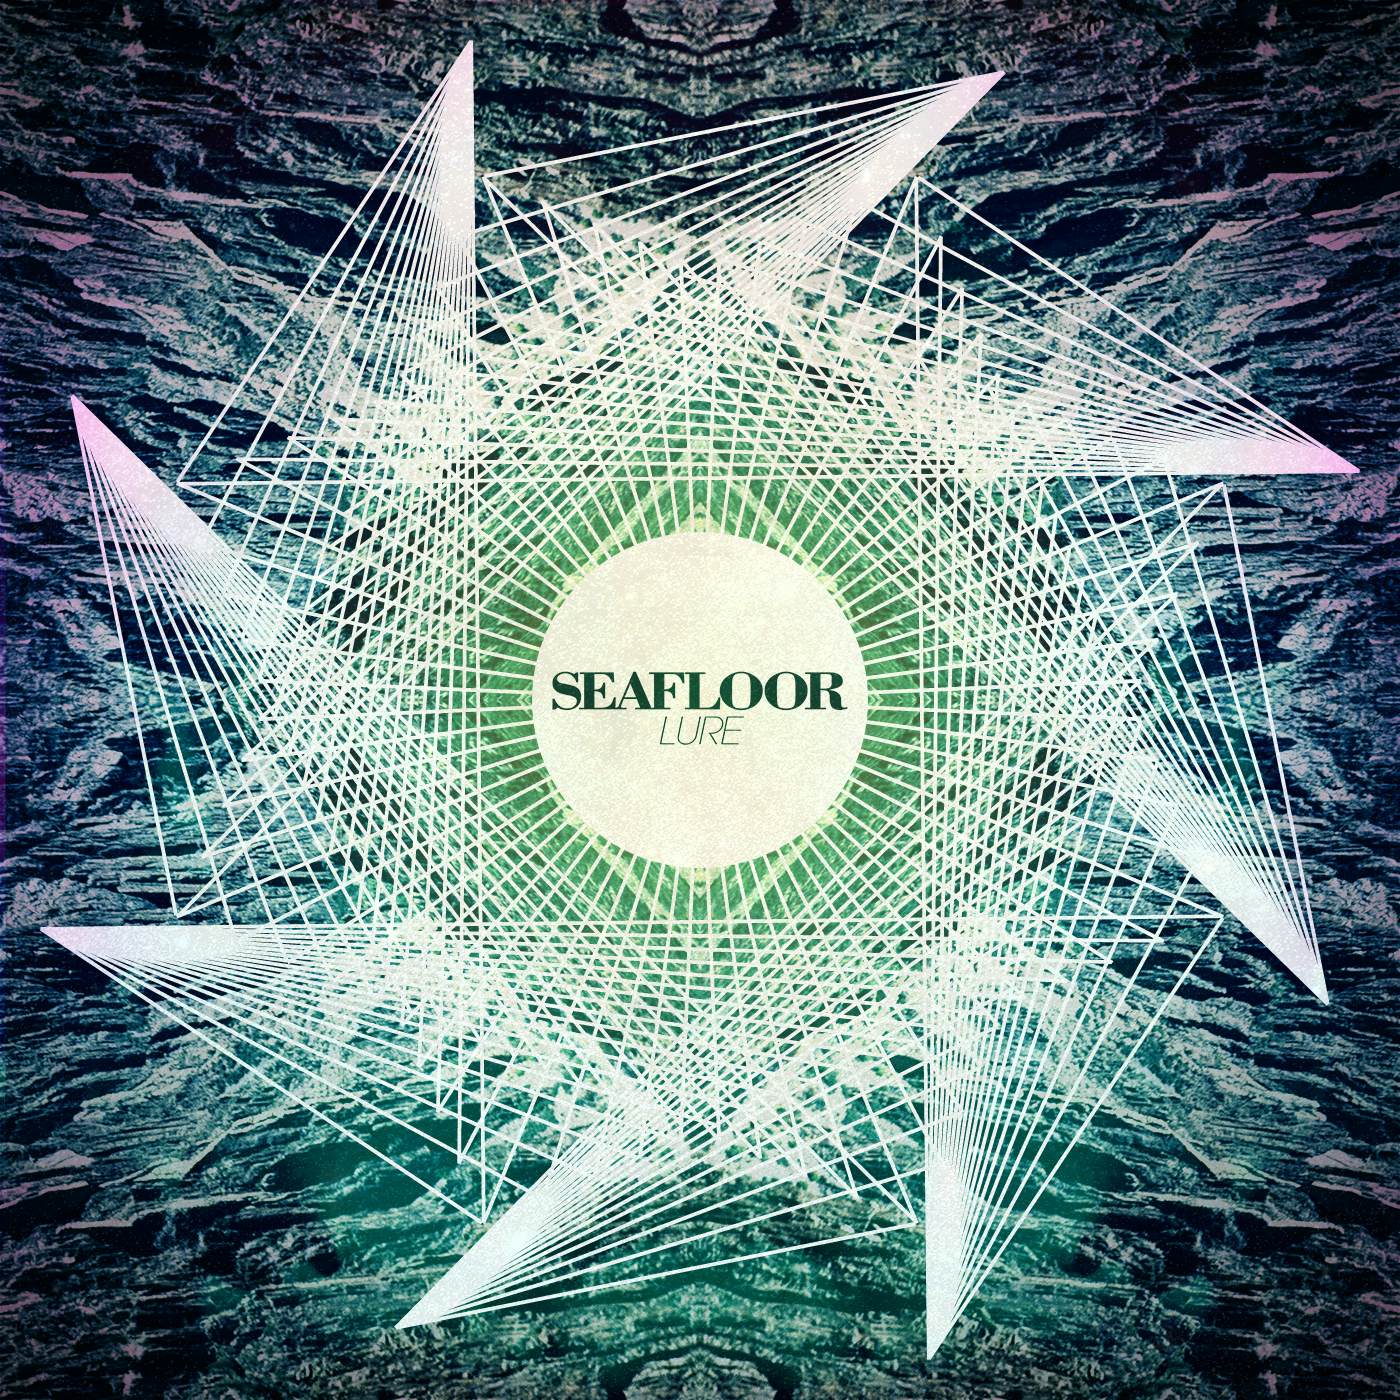 Seafloor Lure Vinyl Record